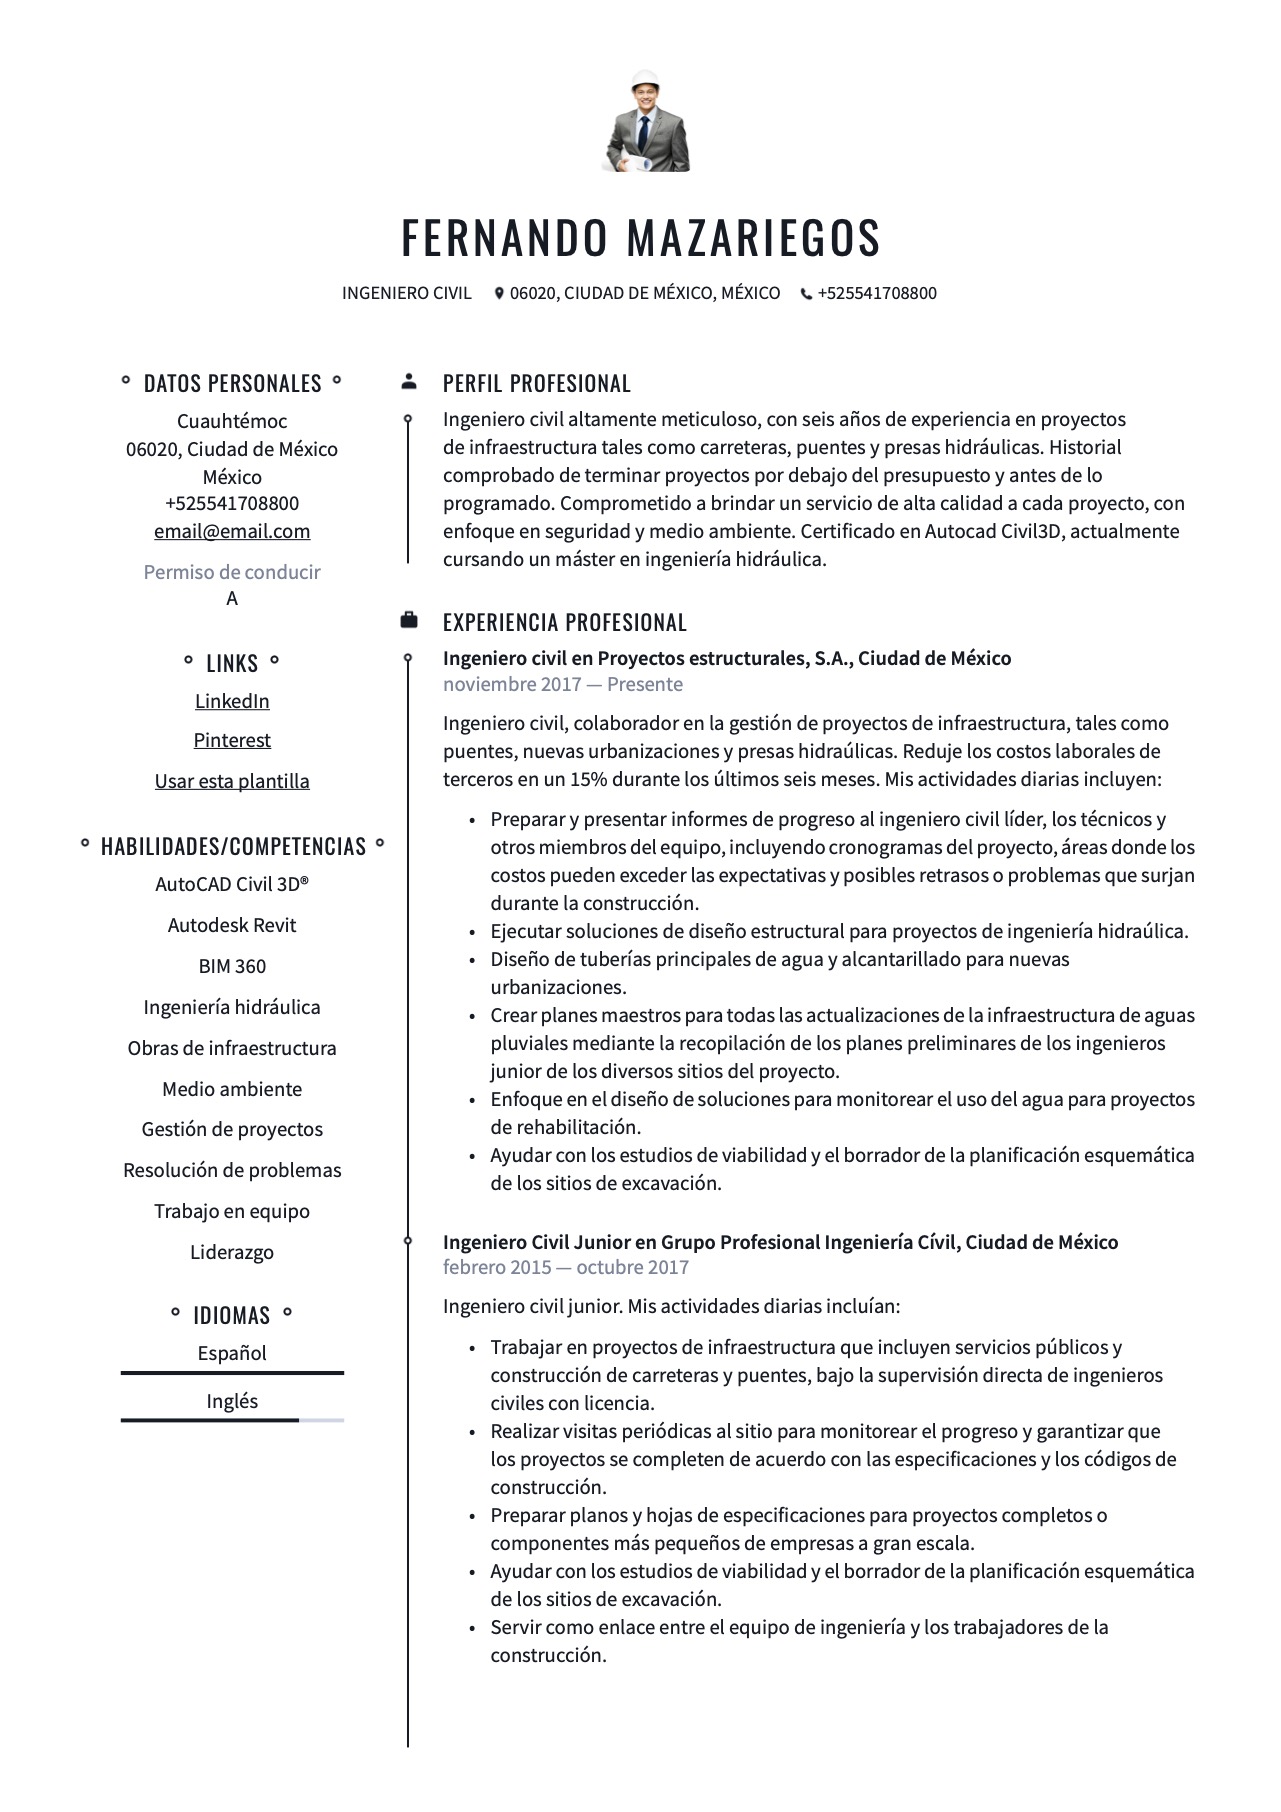 Ejemplo de CV para Ingeniero civil